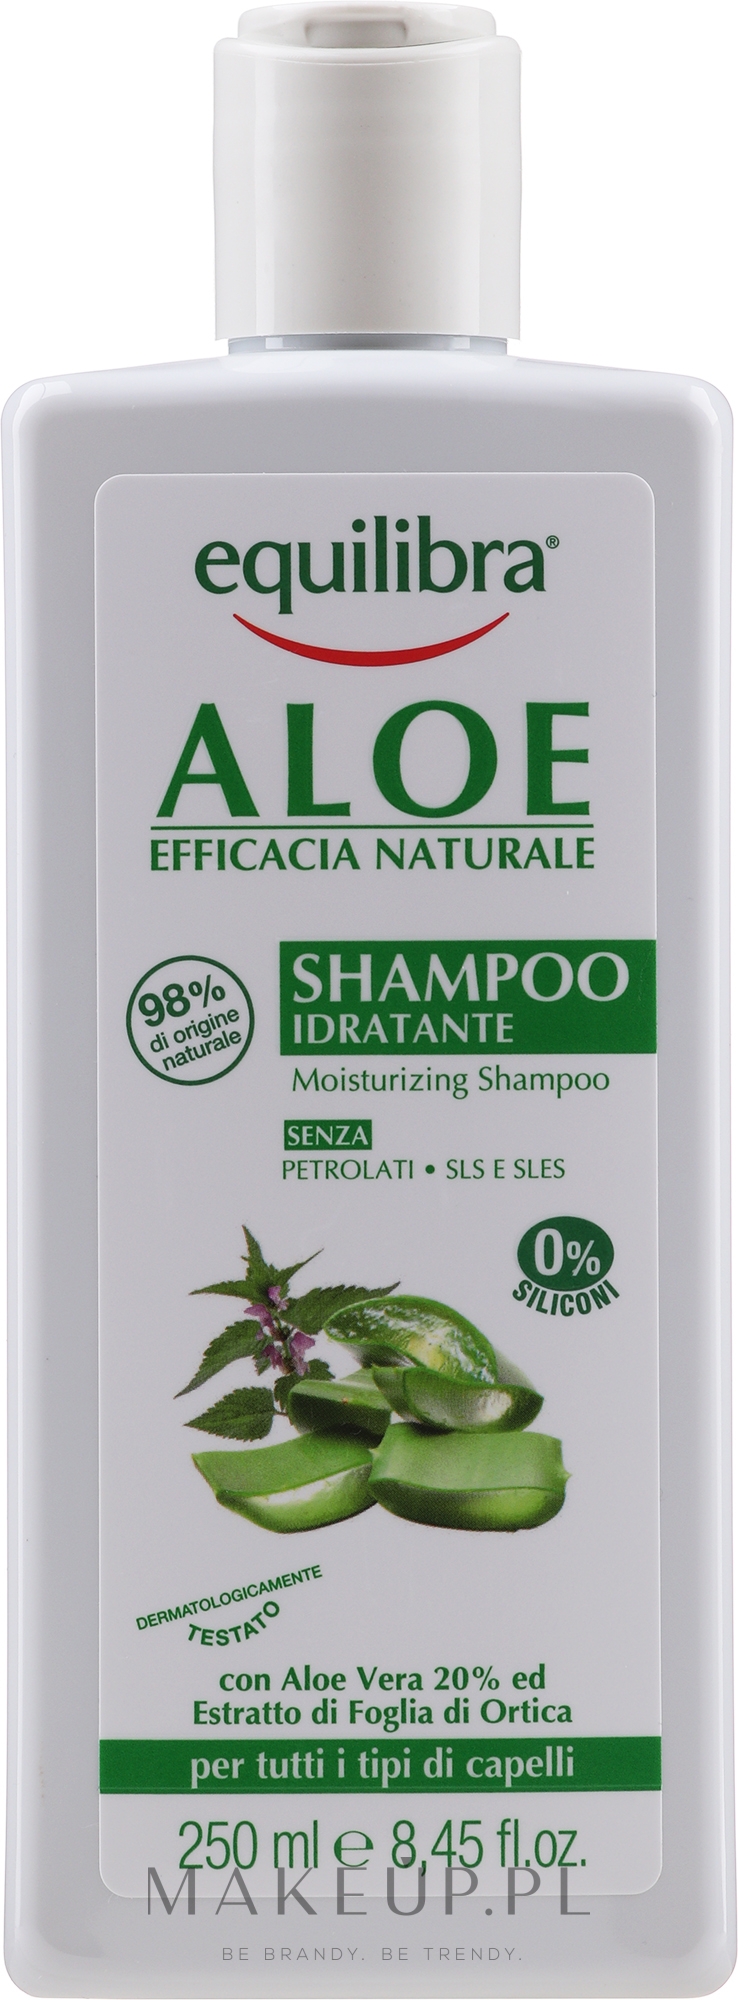 equilibra aloe szampon skład